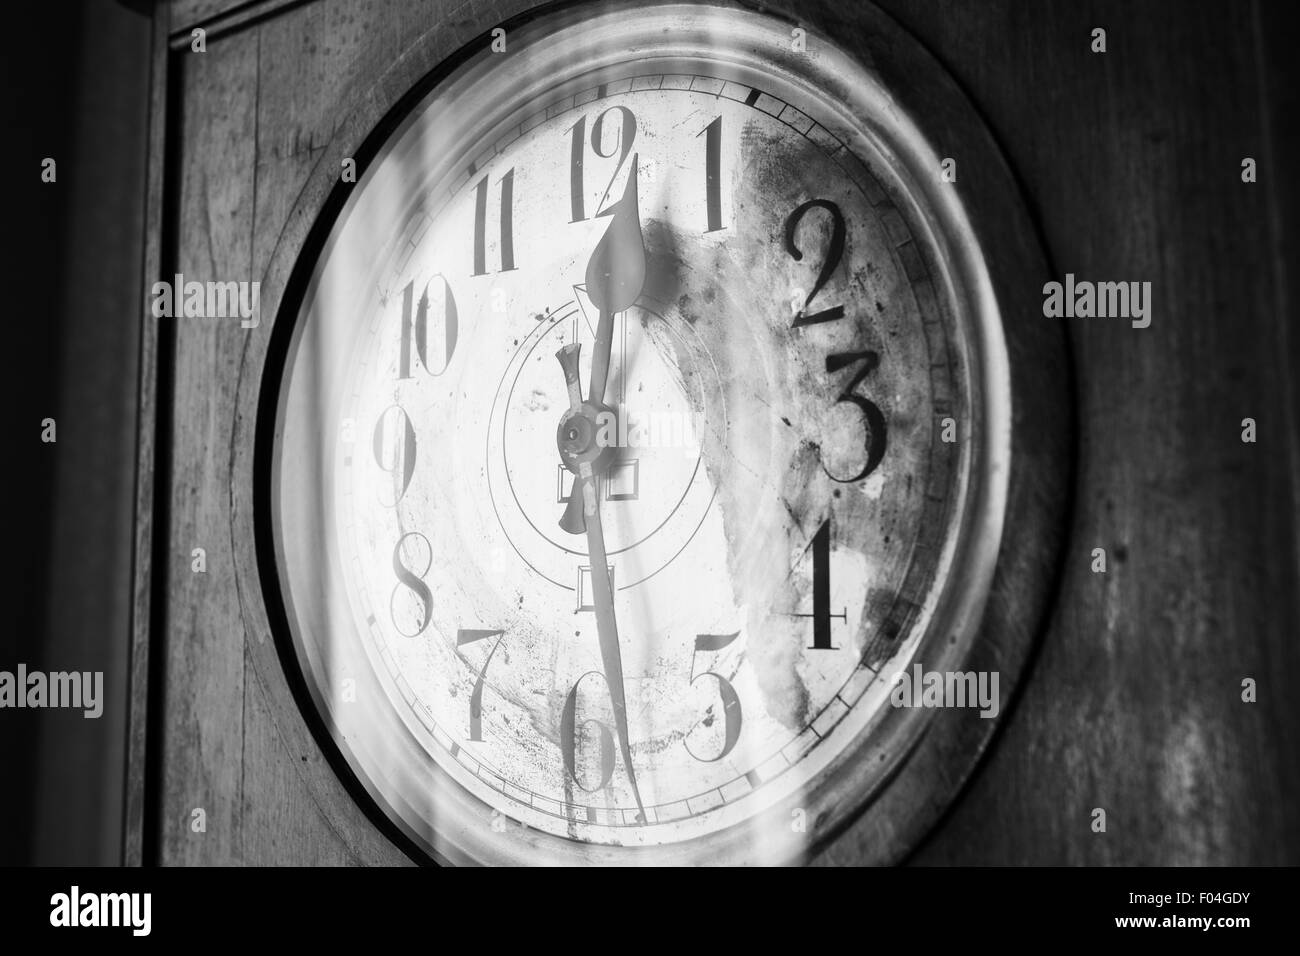 Antique grandfather clock, black and white photo, close up photo Stock Photo